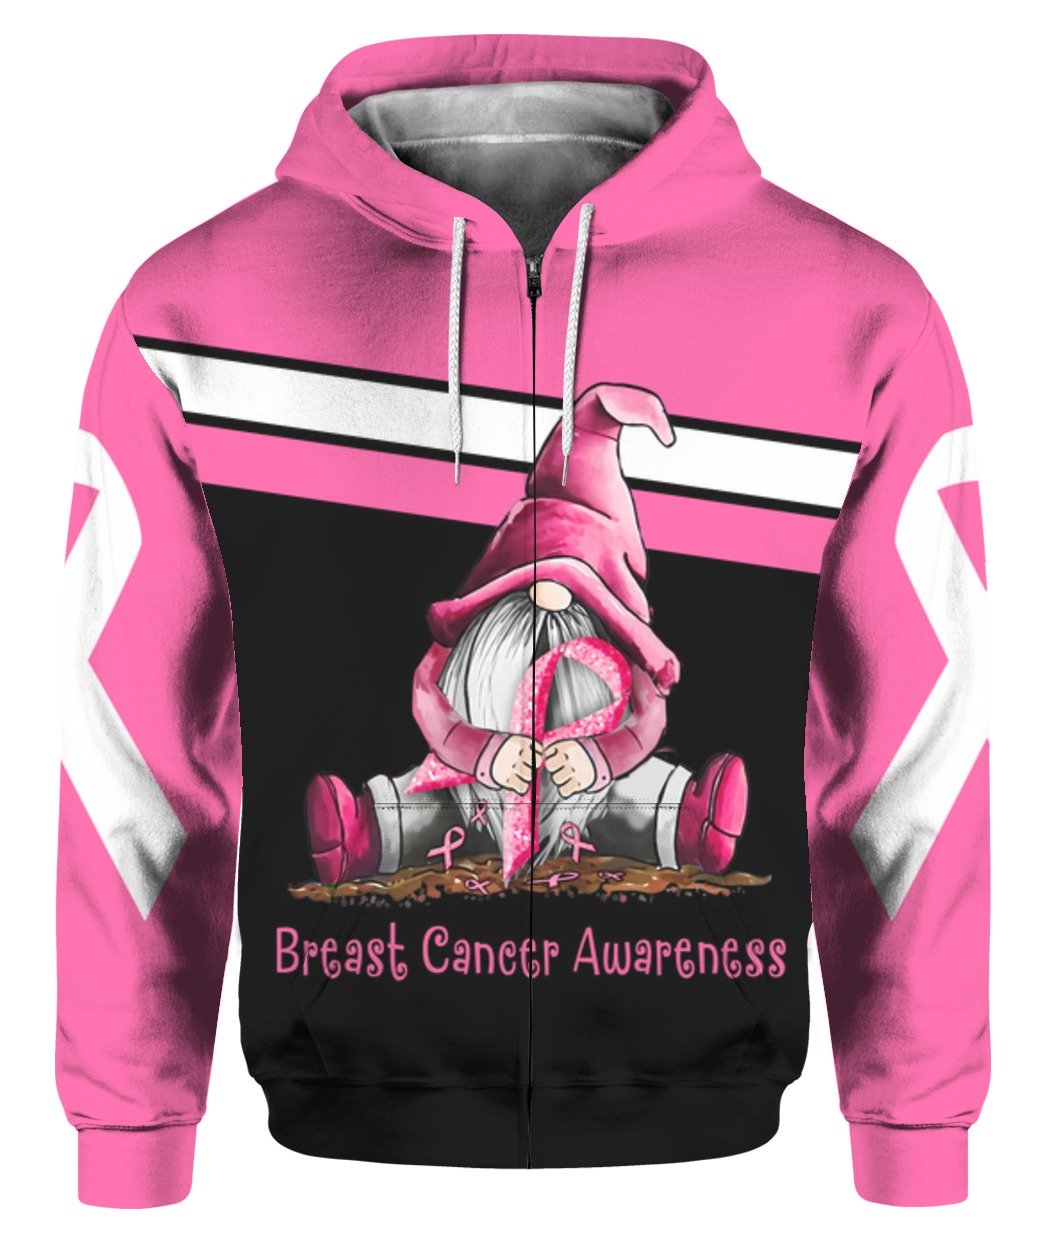 Gnome breast cancer awareness full printing zip hoodie